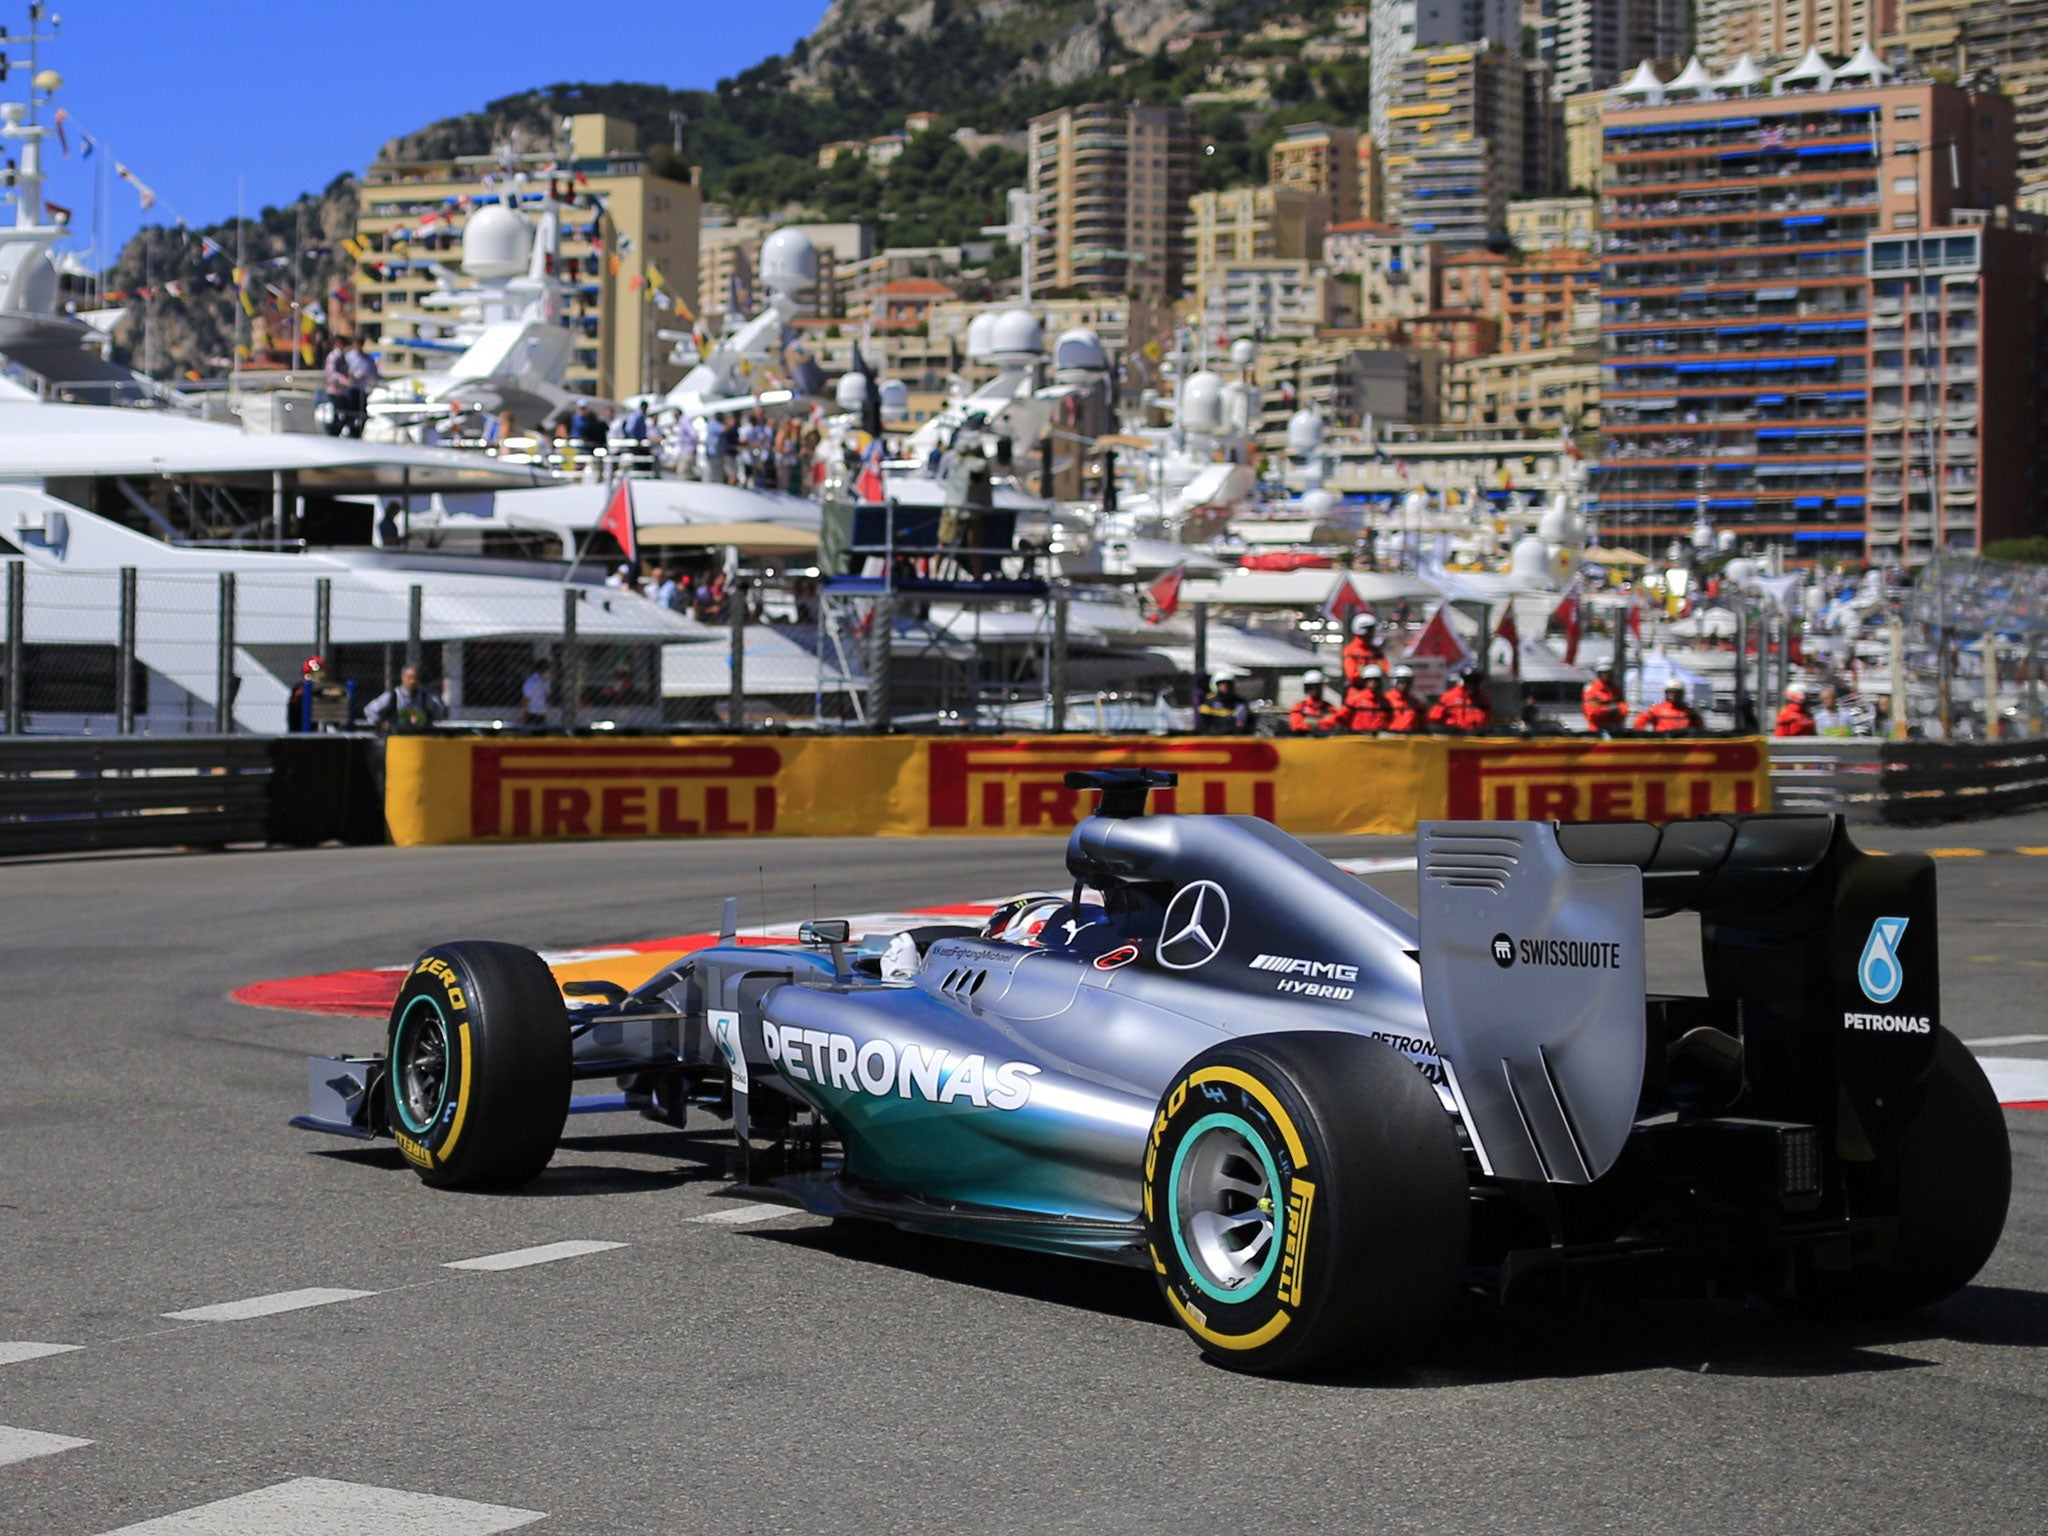 Lewis Hamilton drives during practice for the Monaco Grand Prix